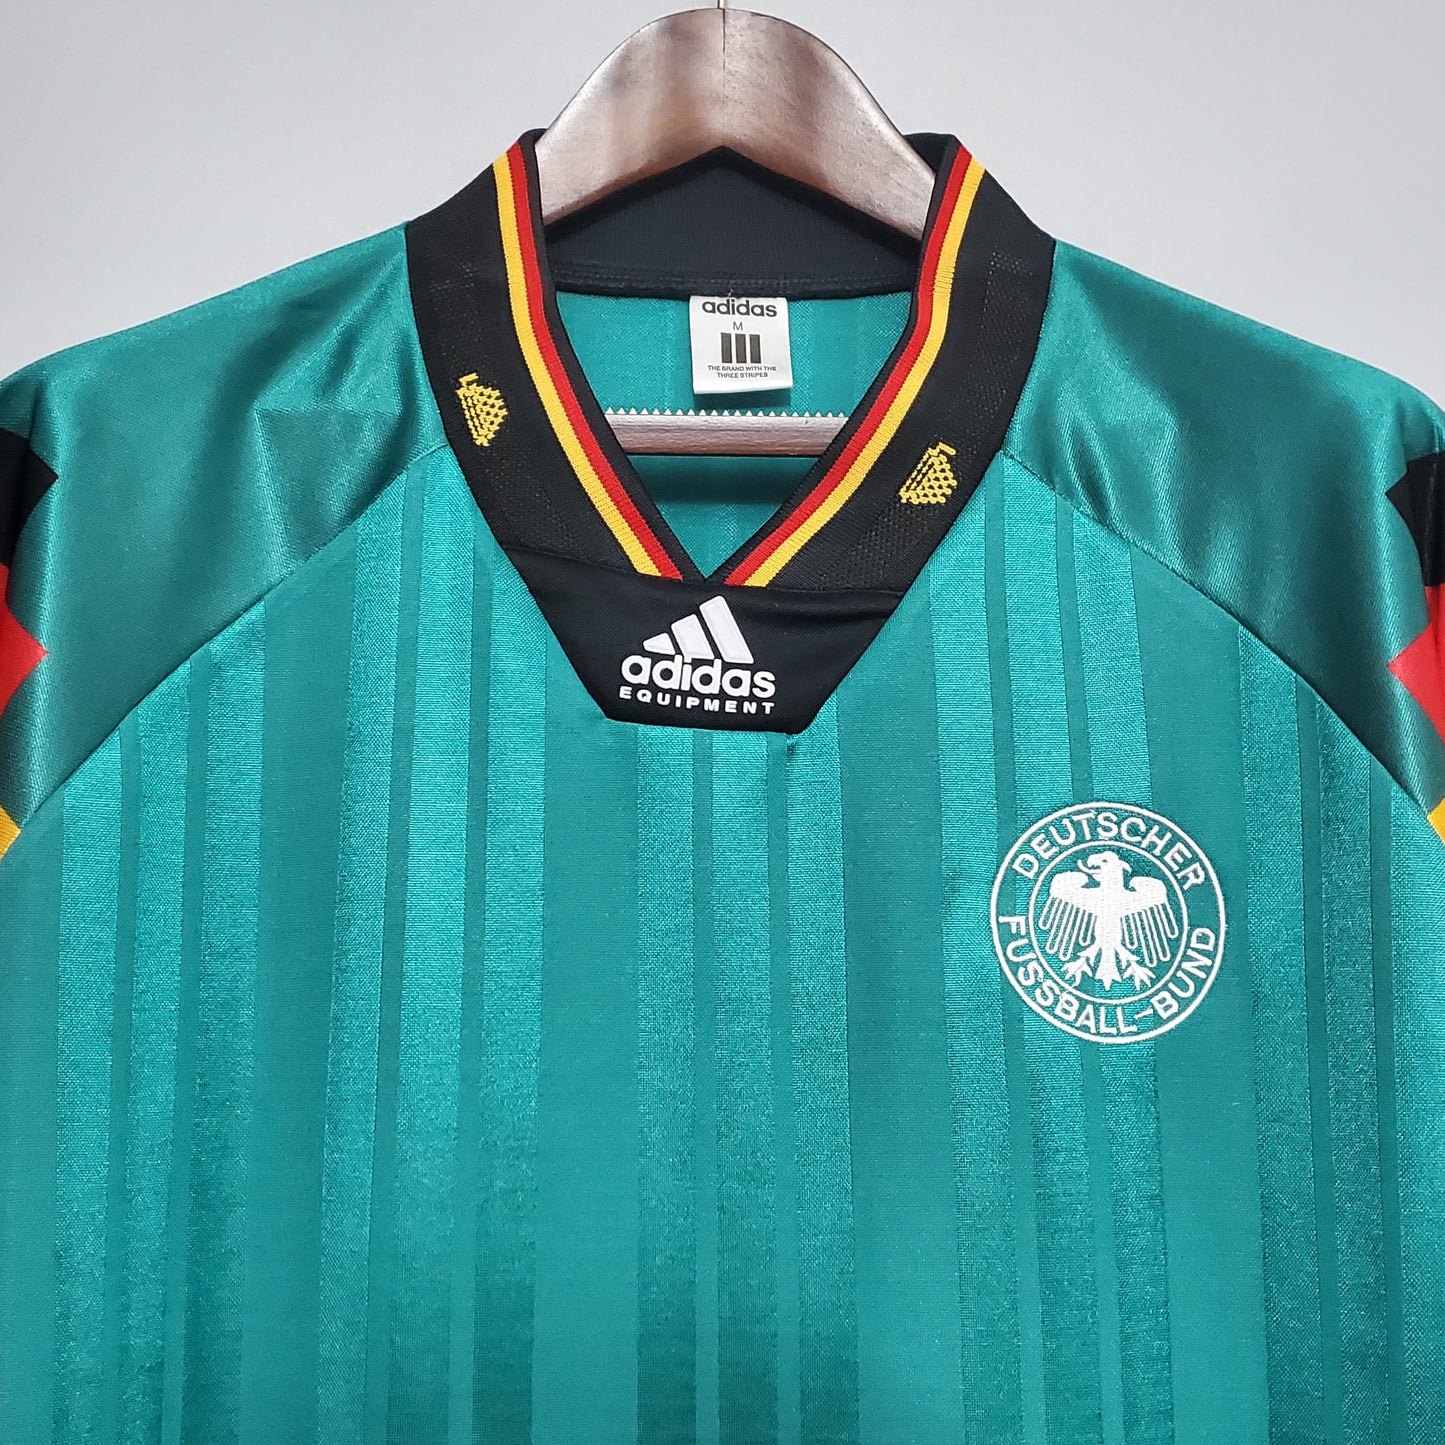 Germany 1992 Away Shirt